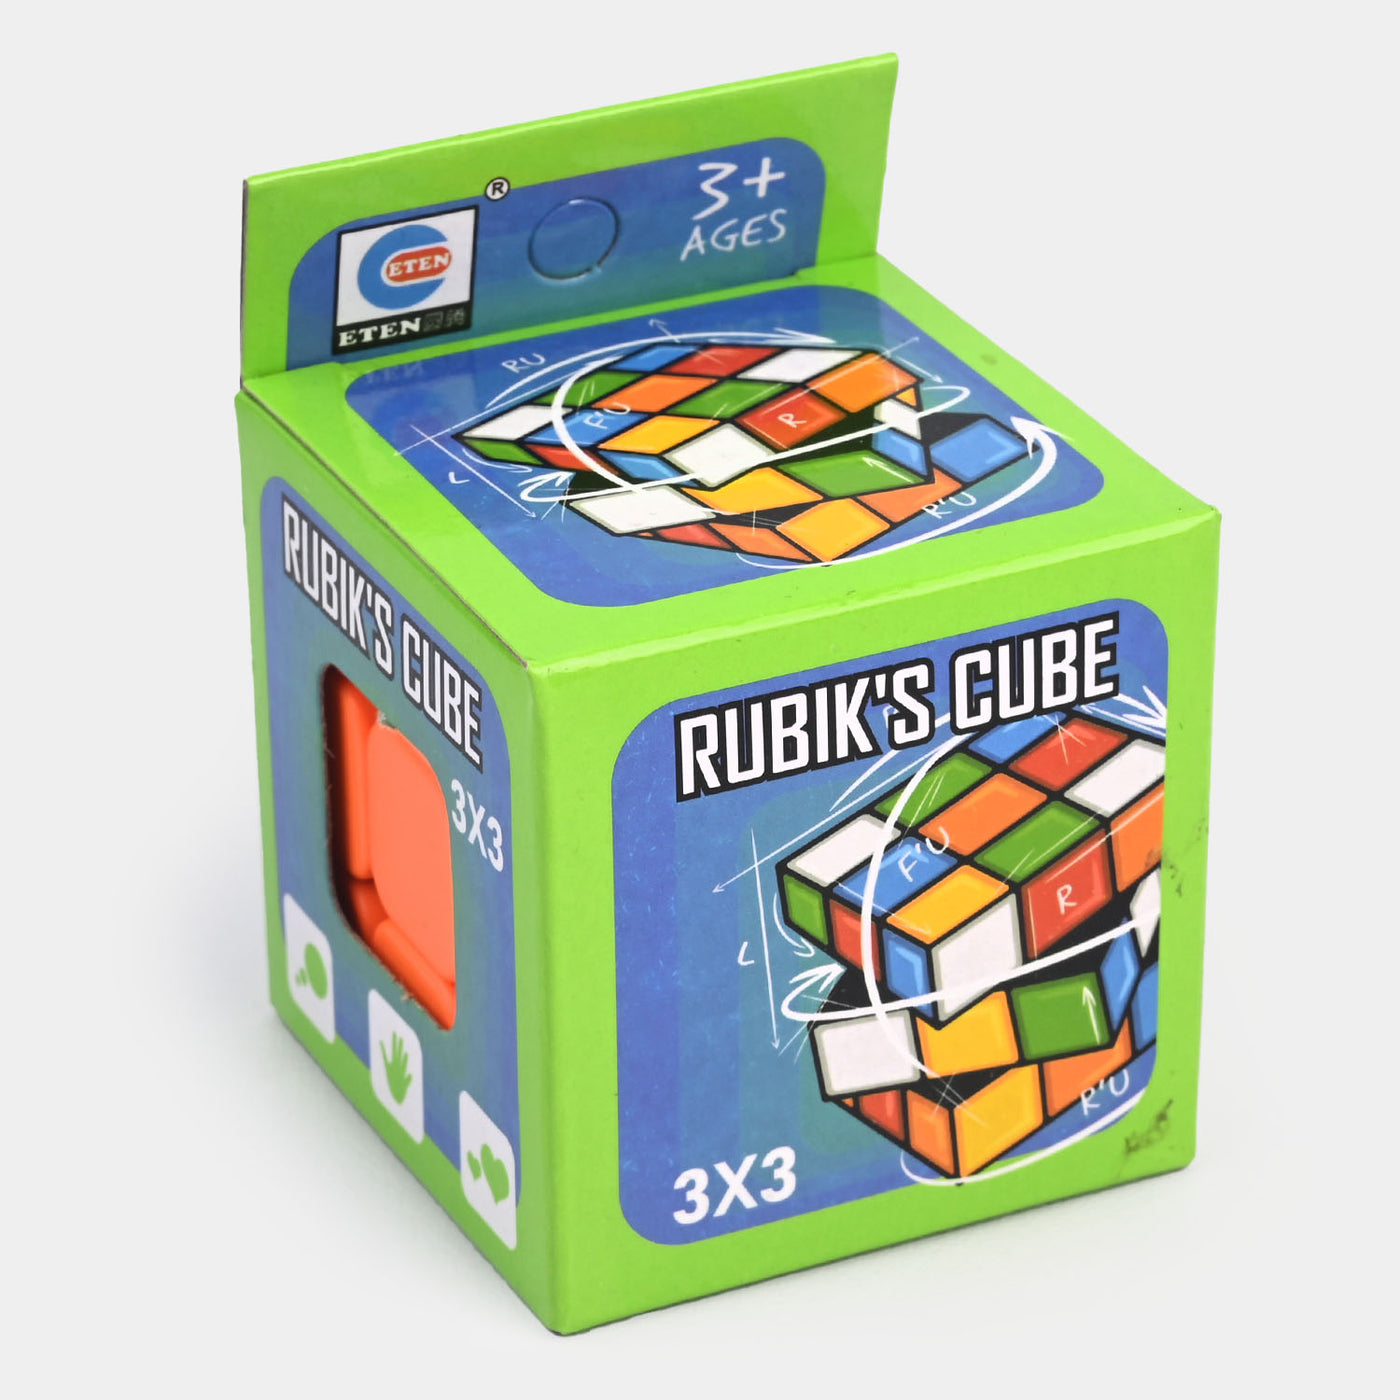 Rubik's Magic Cube Toy For Kids